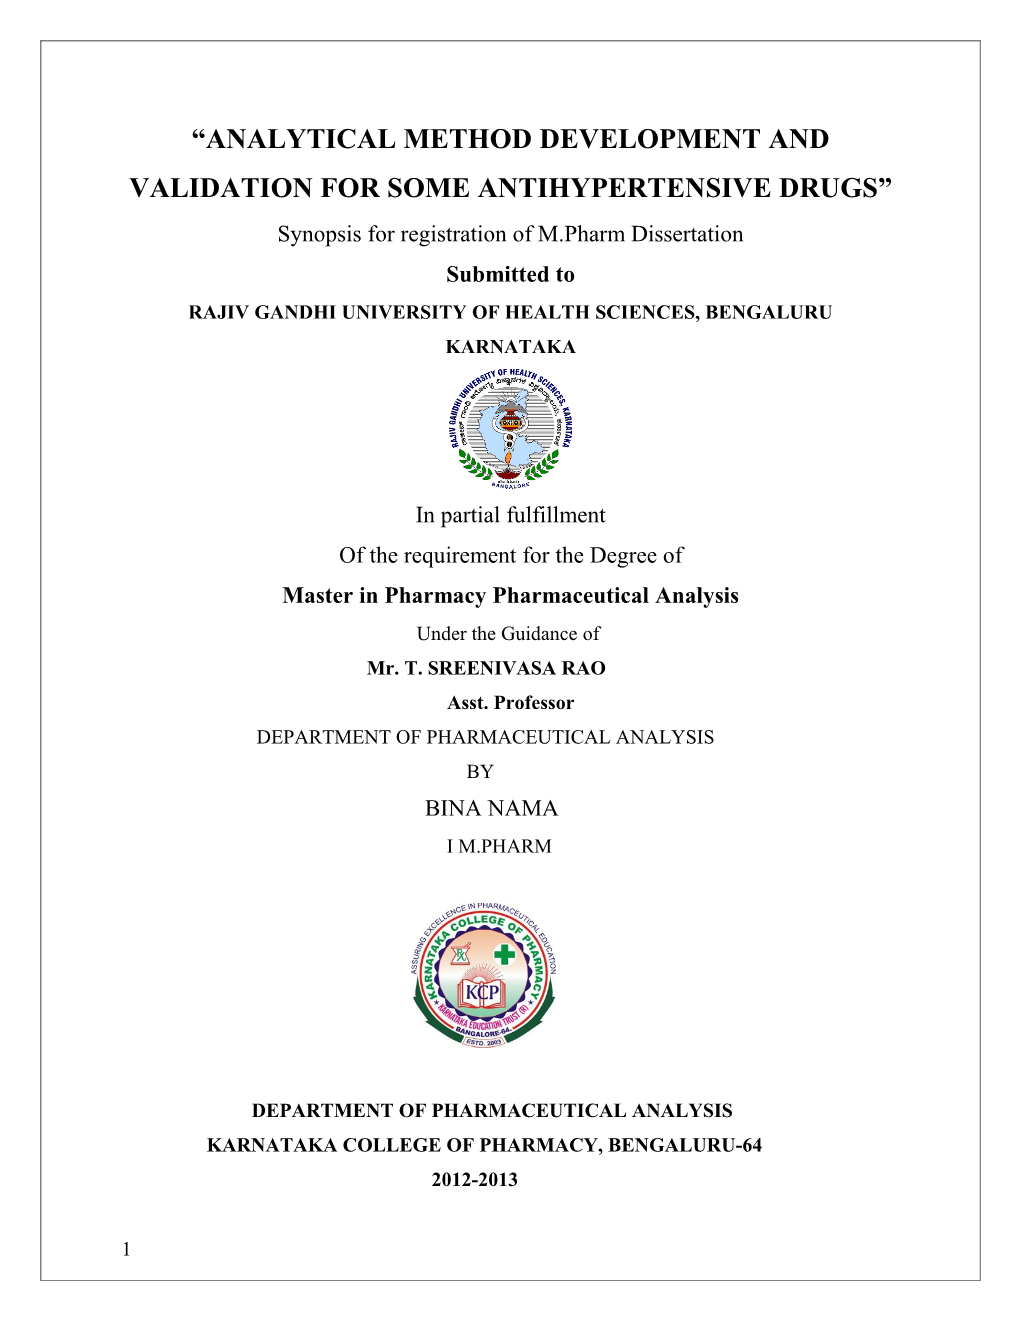 Analytical Method Development and Validation for Some Antihypertensive Drugs